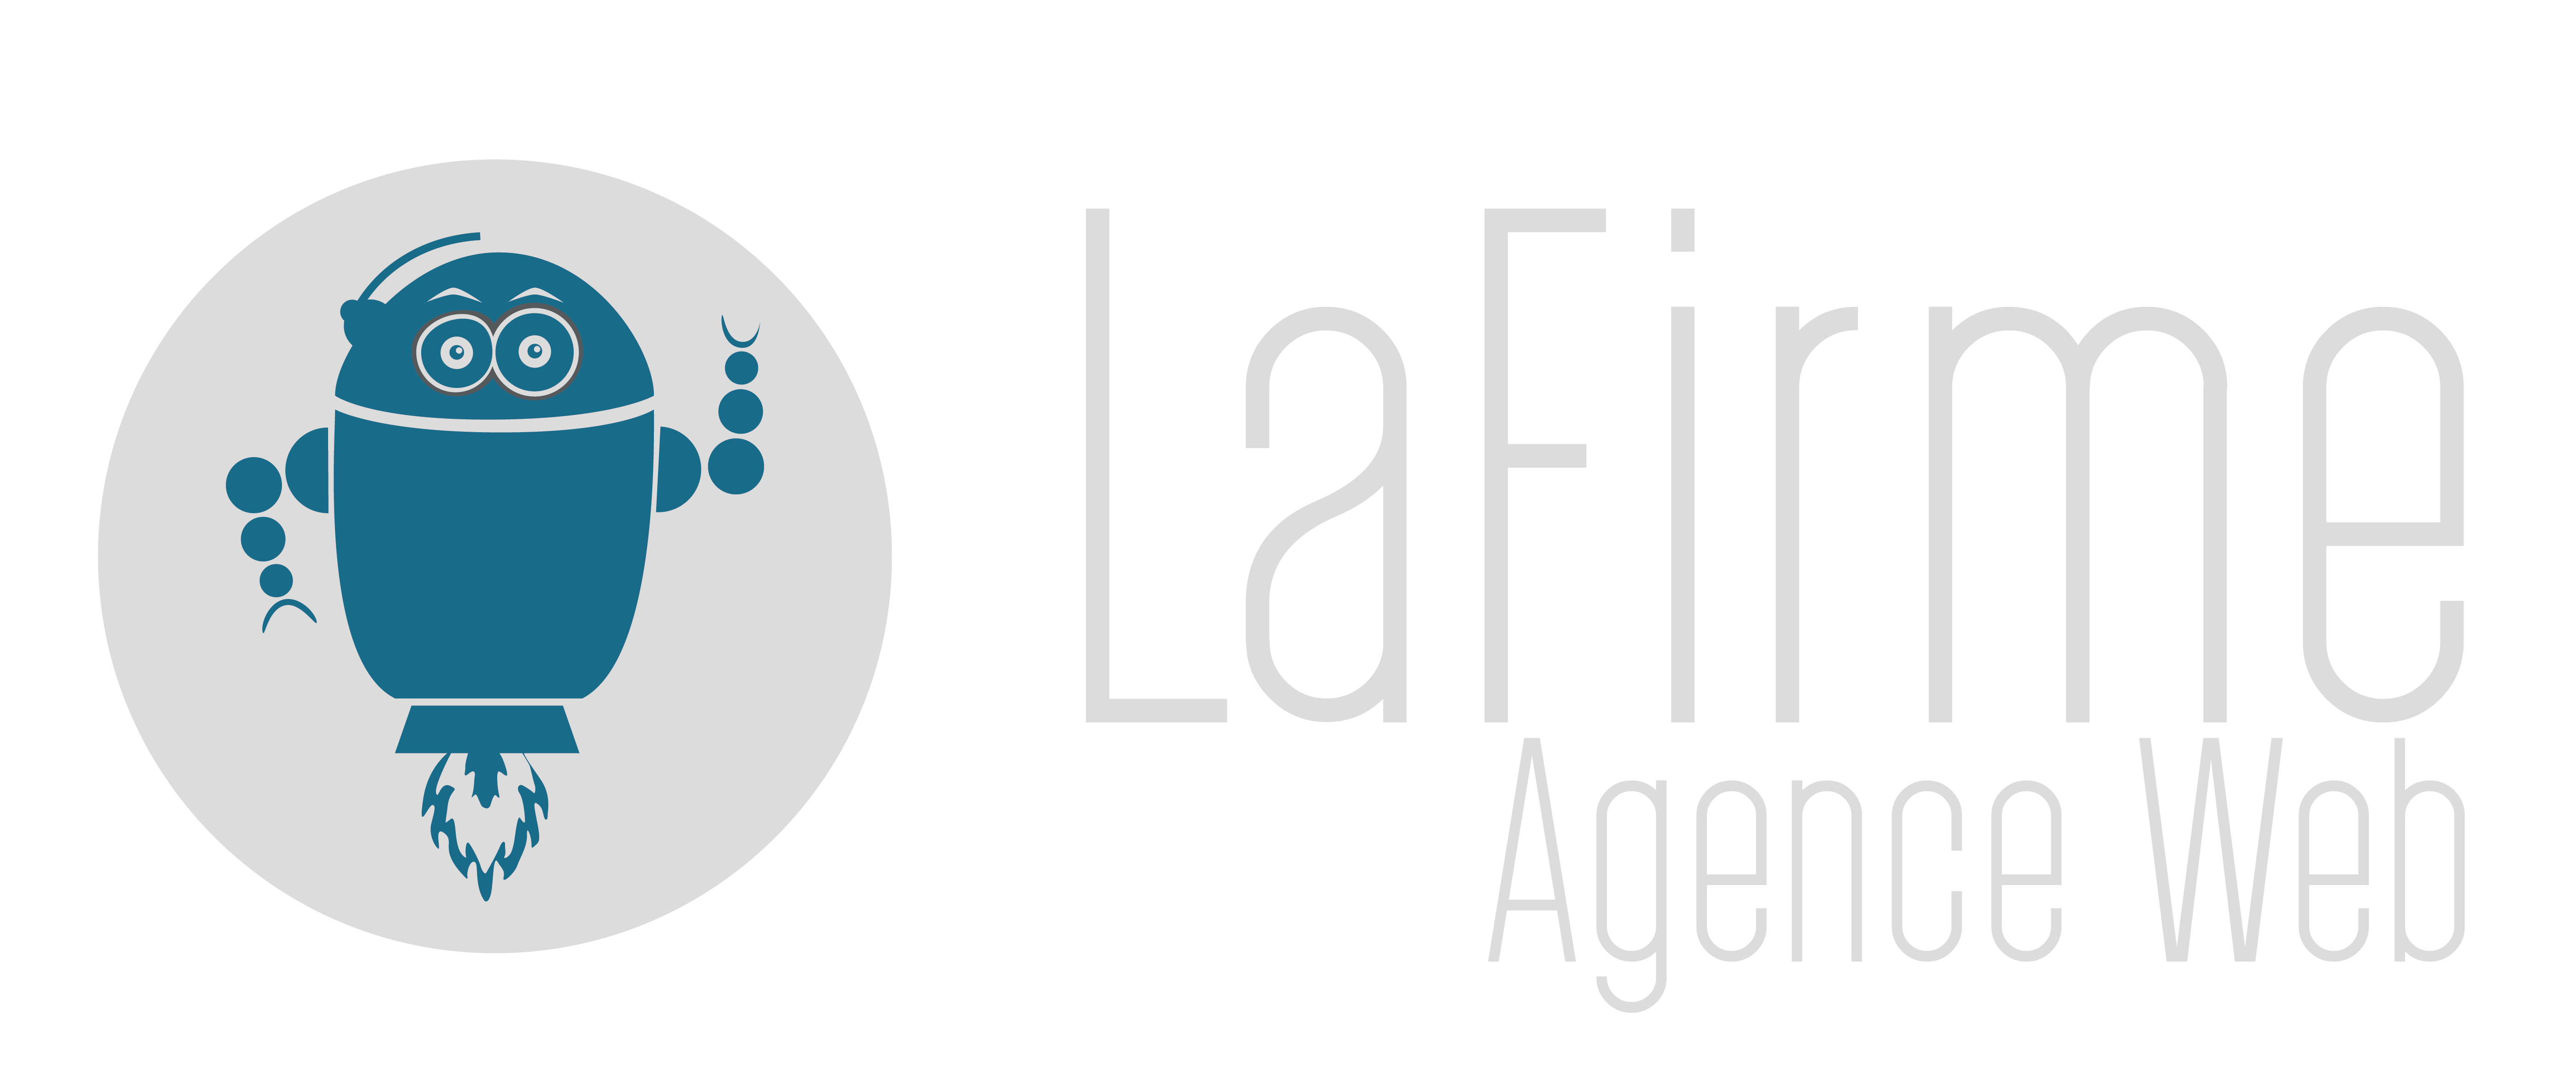 LaFirme Agence Web Maintenance et correction site Web